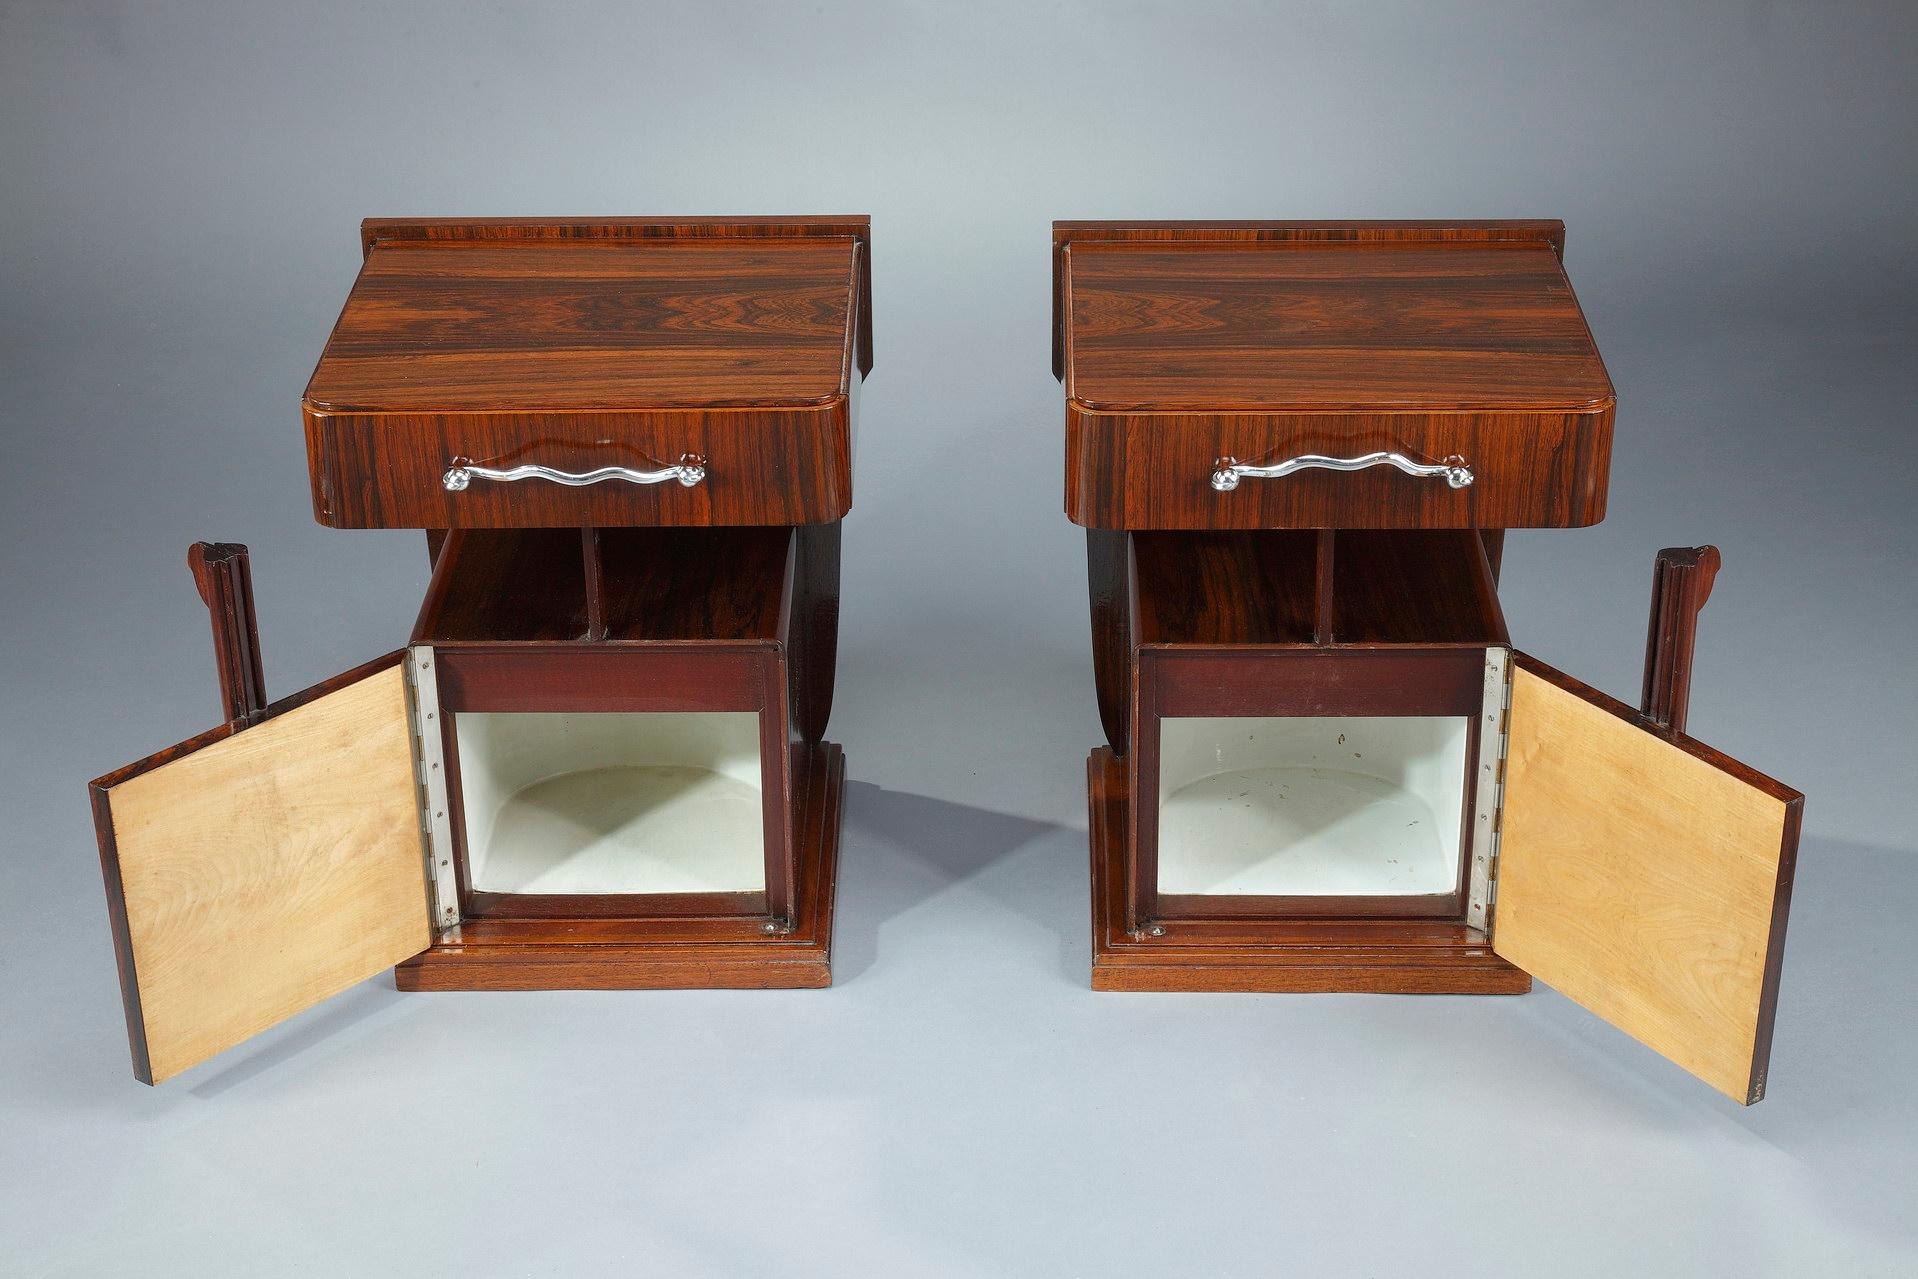 Early 20th Century Pair of Bedside Tables in Macassar Ebony Veneer